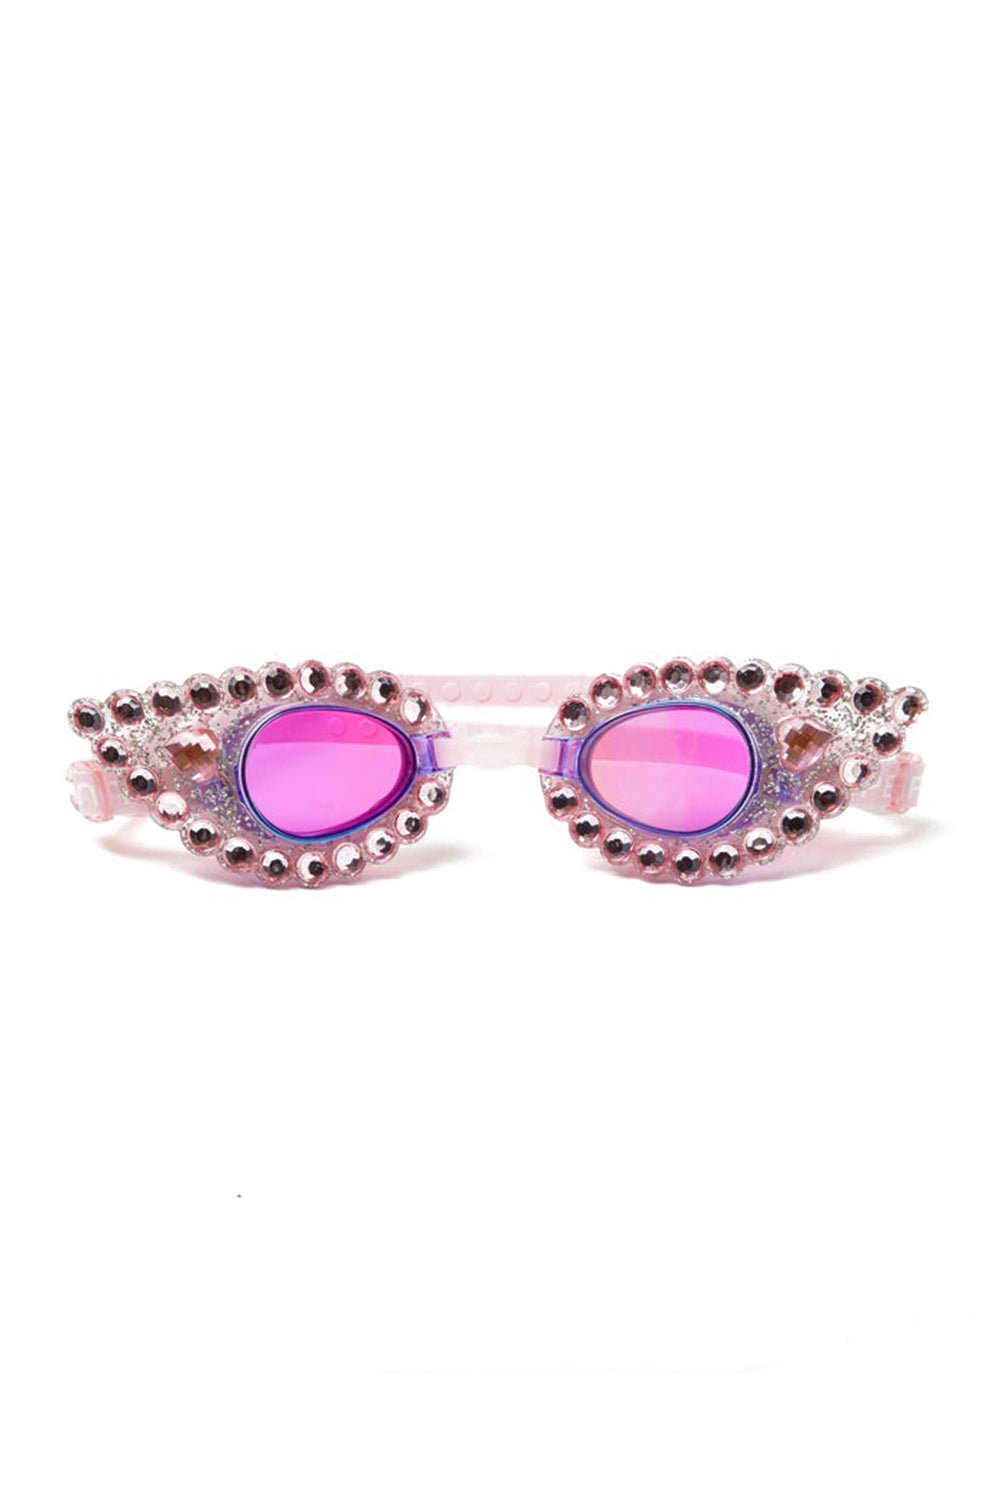 SUPER SMALLS-Pink Splash Goggles-PINK